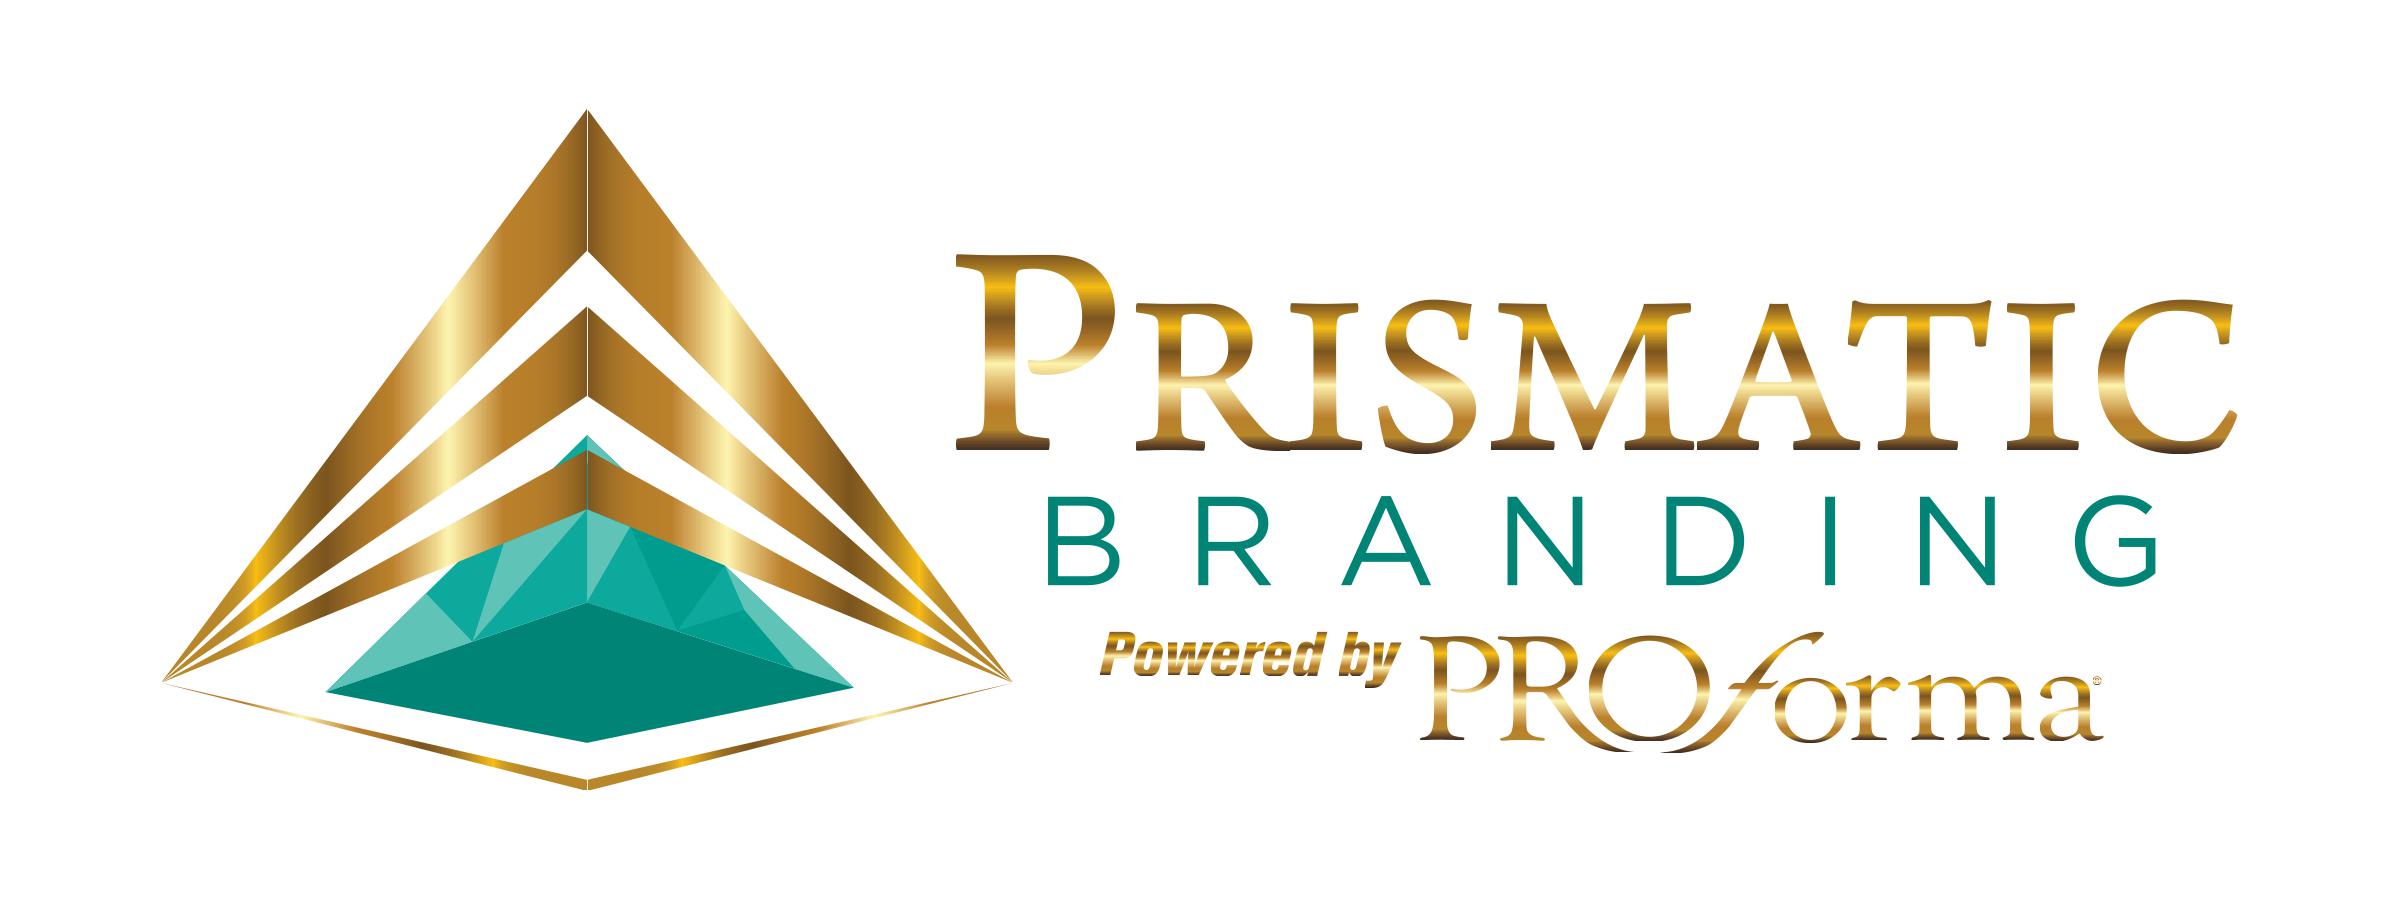 Prismatic Branding by Proforma